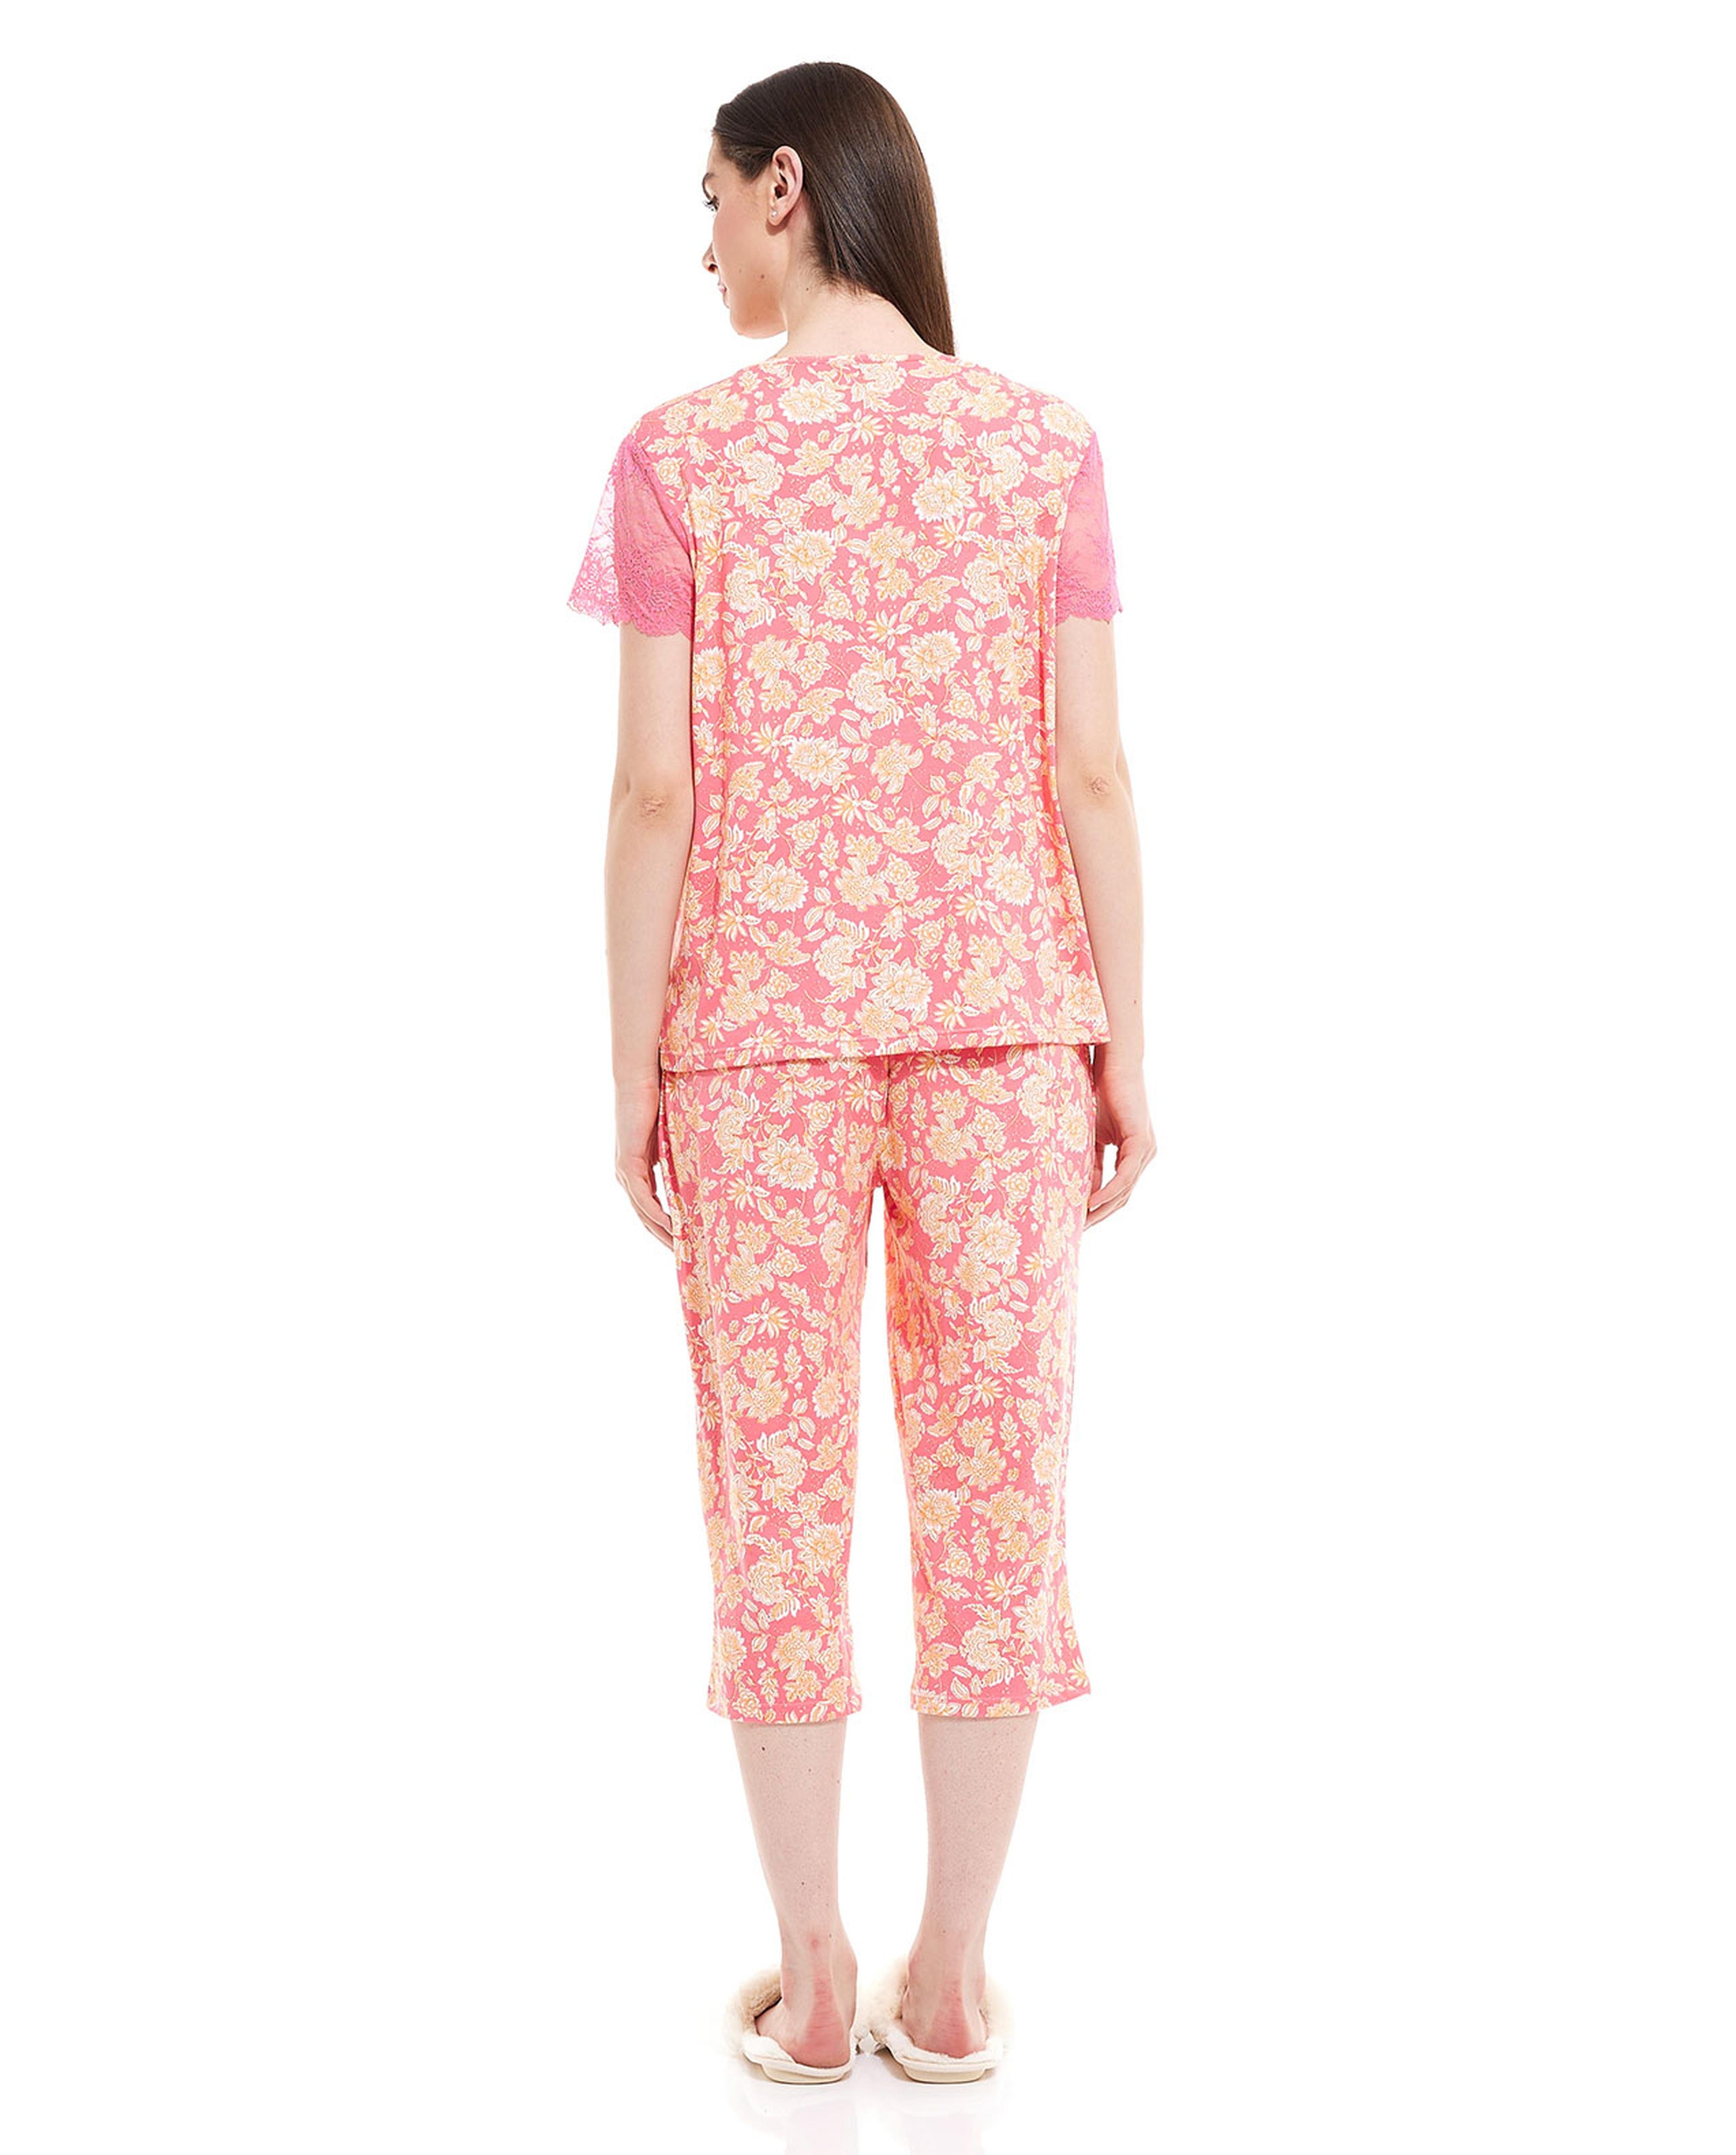 Floral Printed Capri Pajama Set with Lace Sleeves